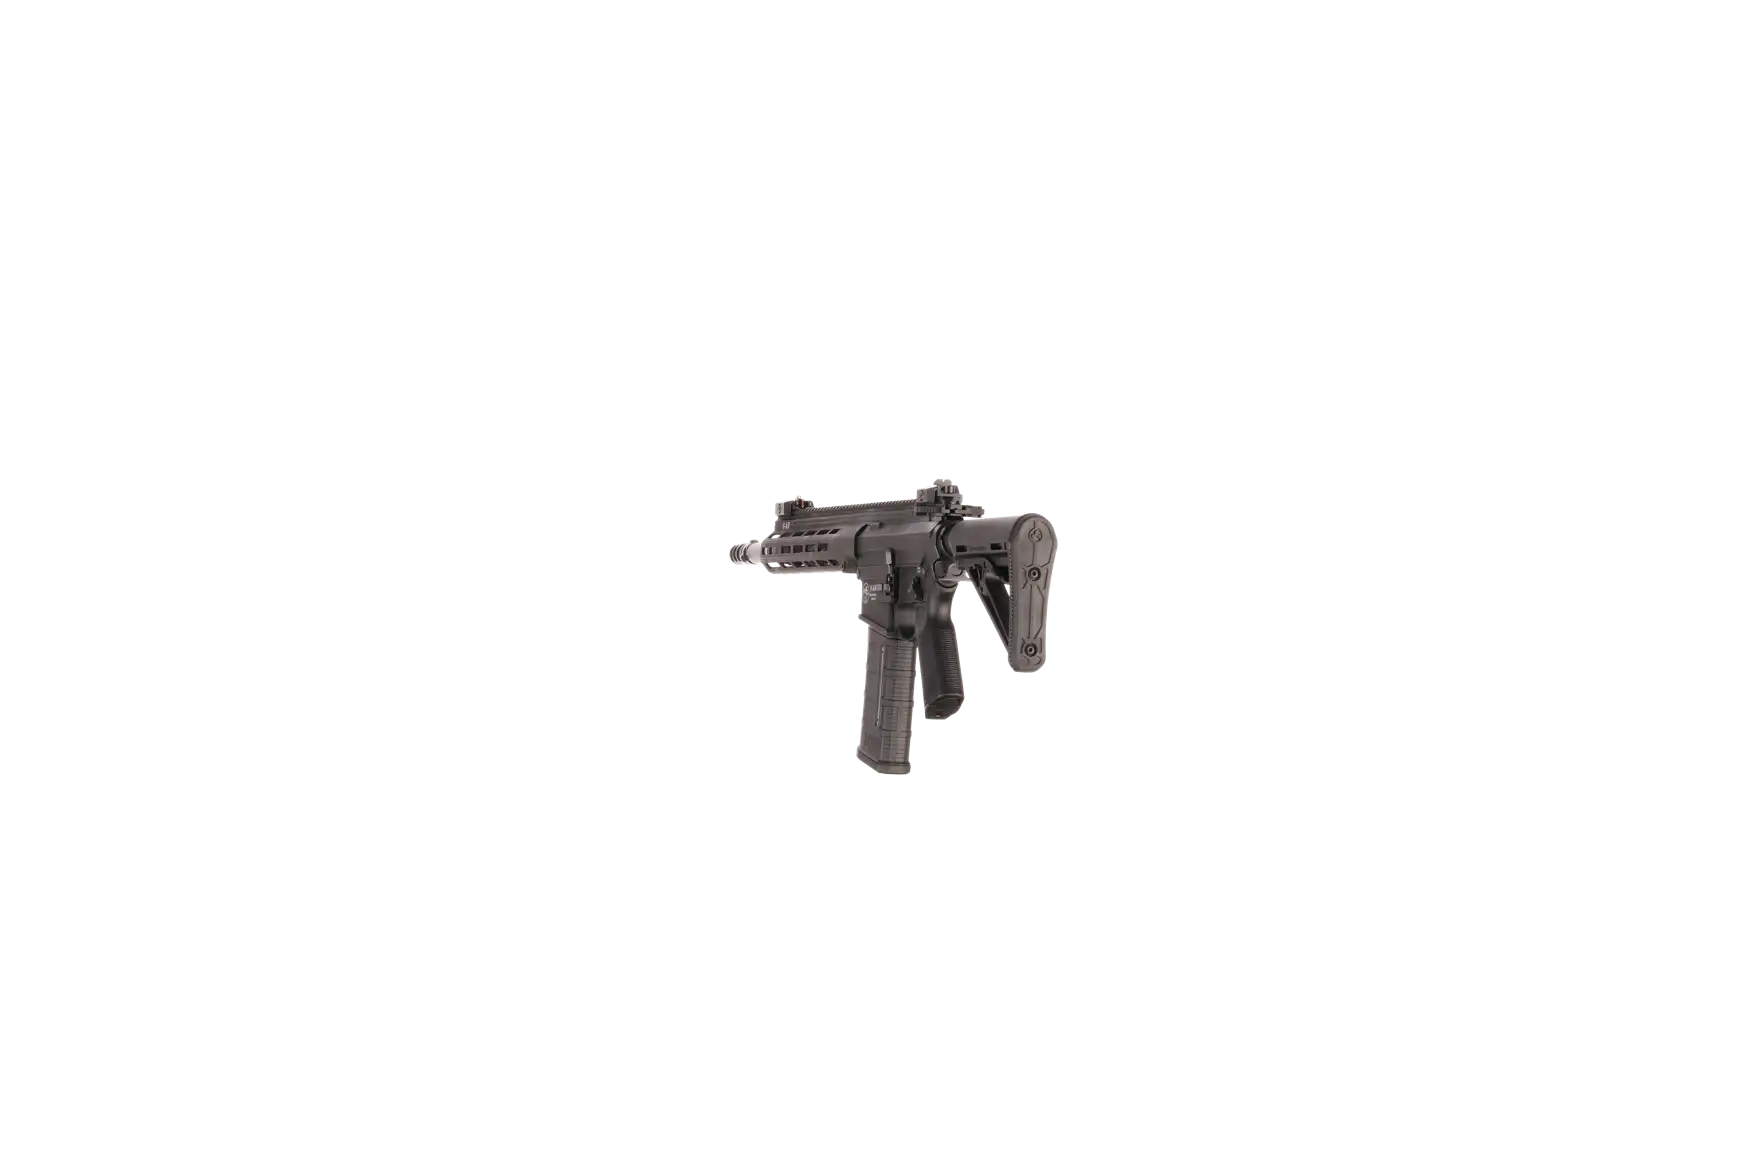 Náhledový obrázek pušky V-AR 762 x 45mm SPINVIEW 1 R50